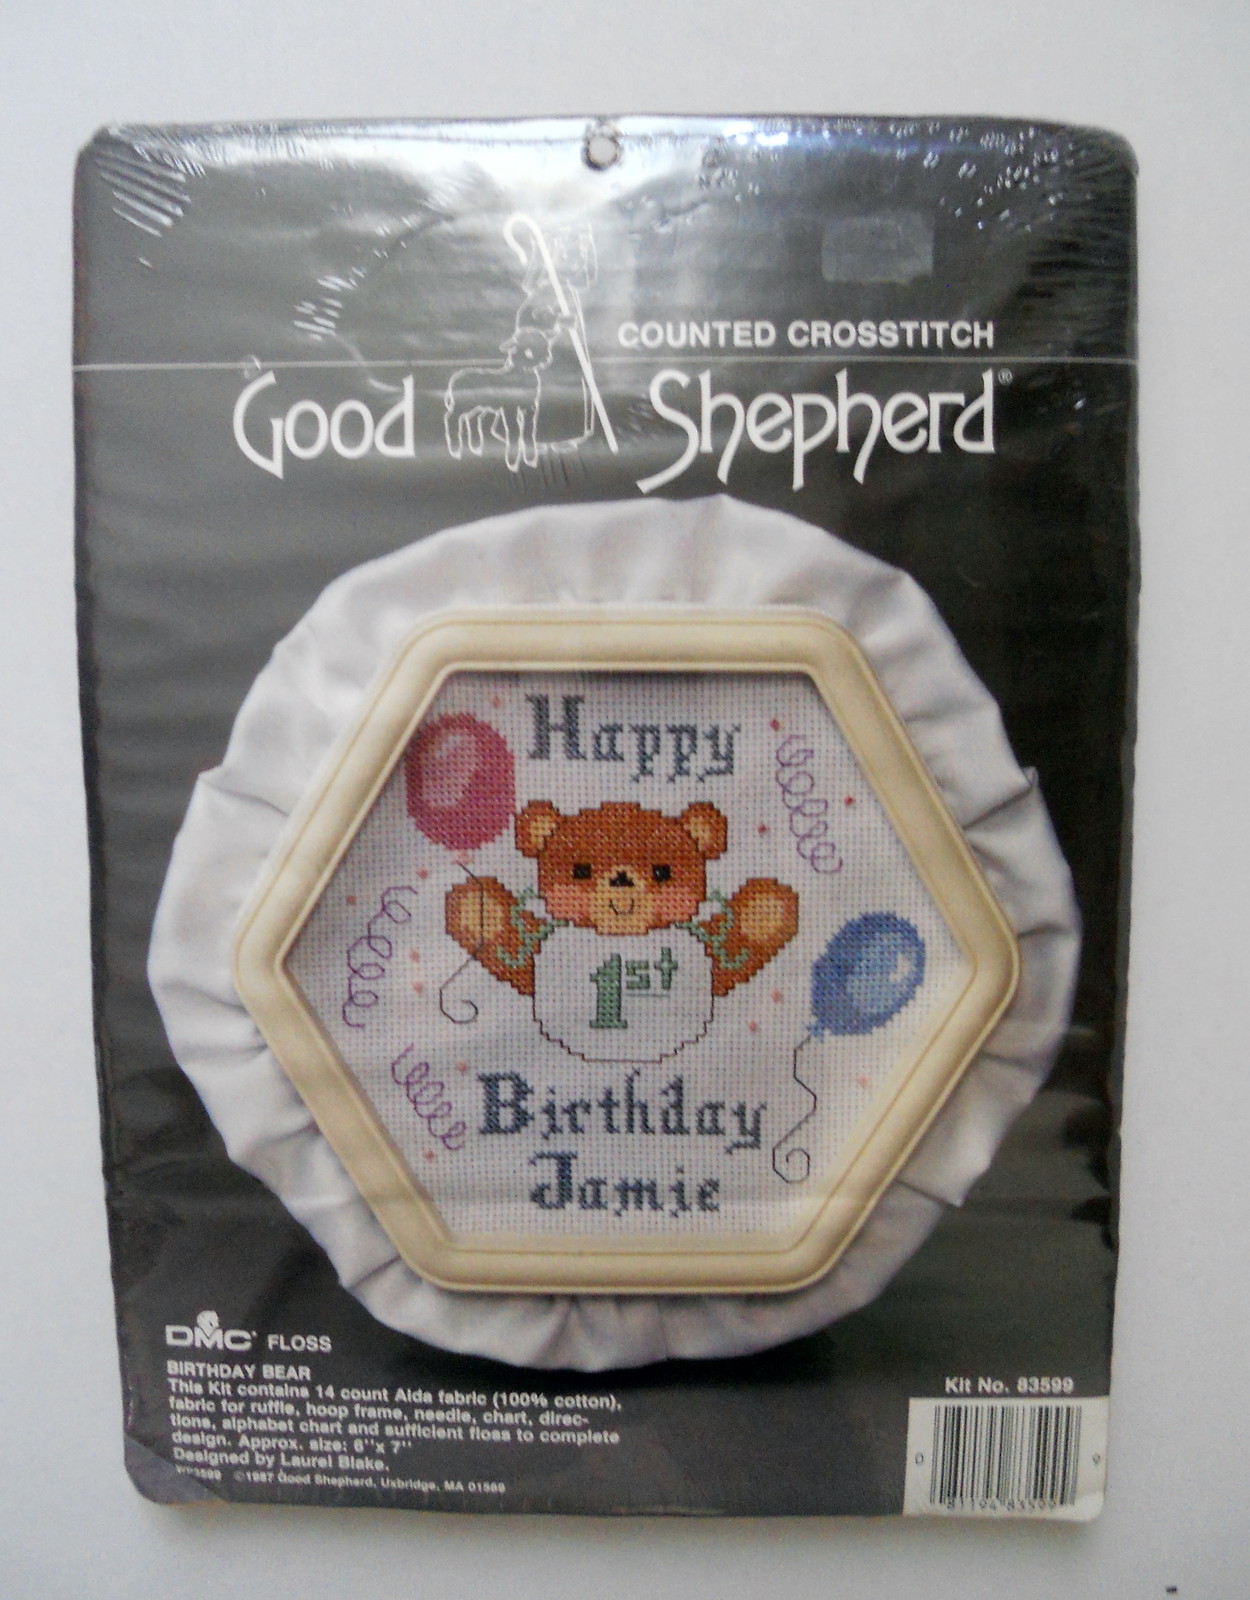 Good Shepherd Counted Cross Stitch Kit No. 83599 - Birthday Bear  - $15.99